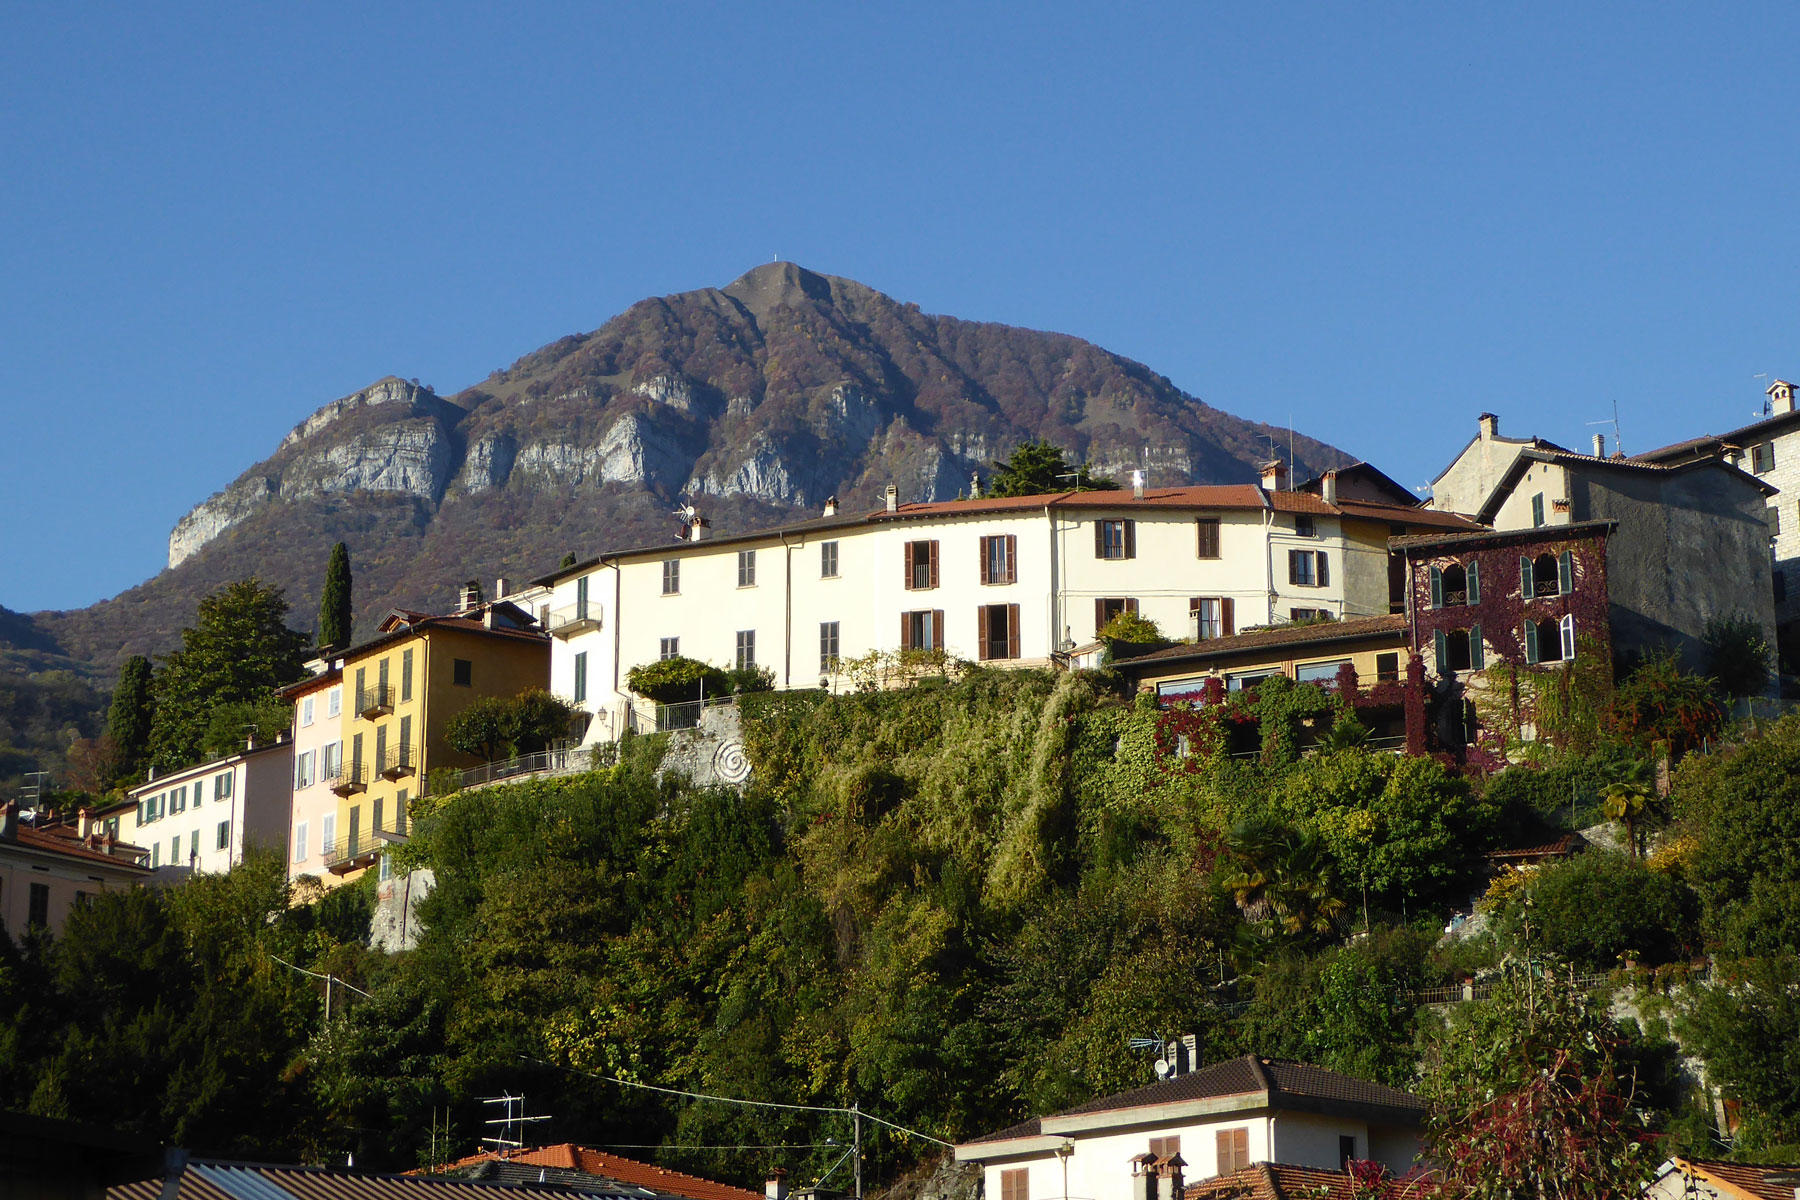 Castello, Menaggio's medieval part of the town